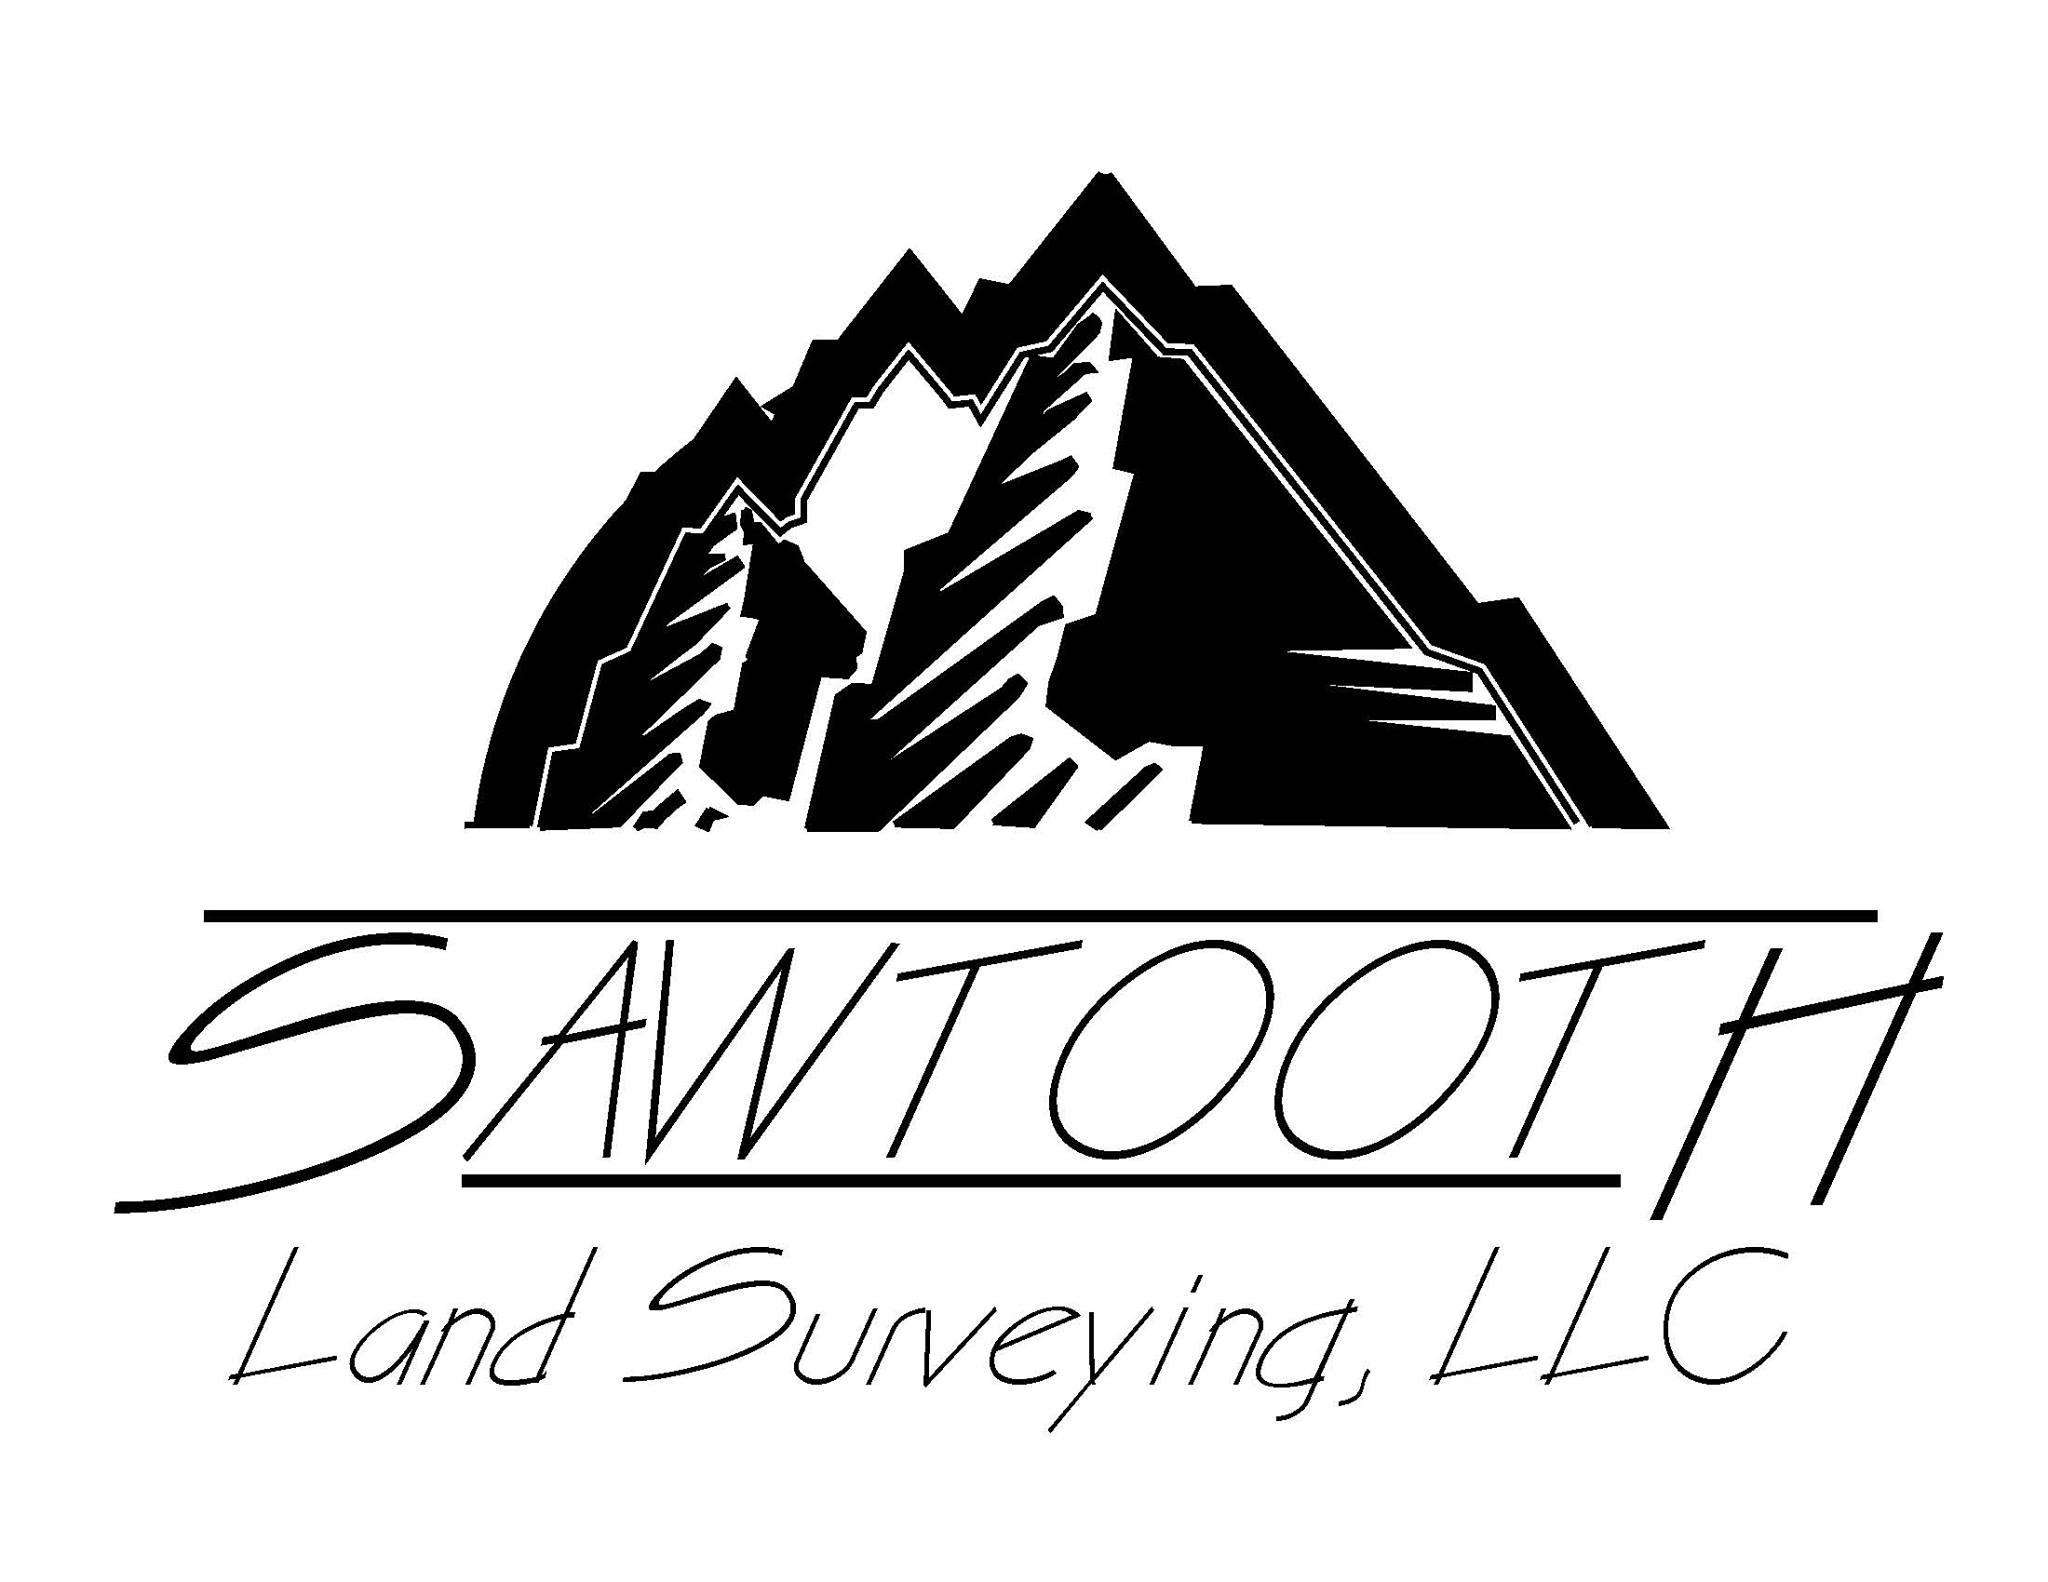 Sawtooth Land Surveying, LLC Logo